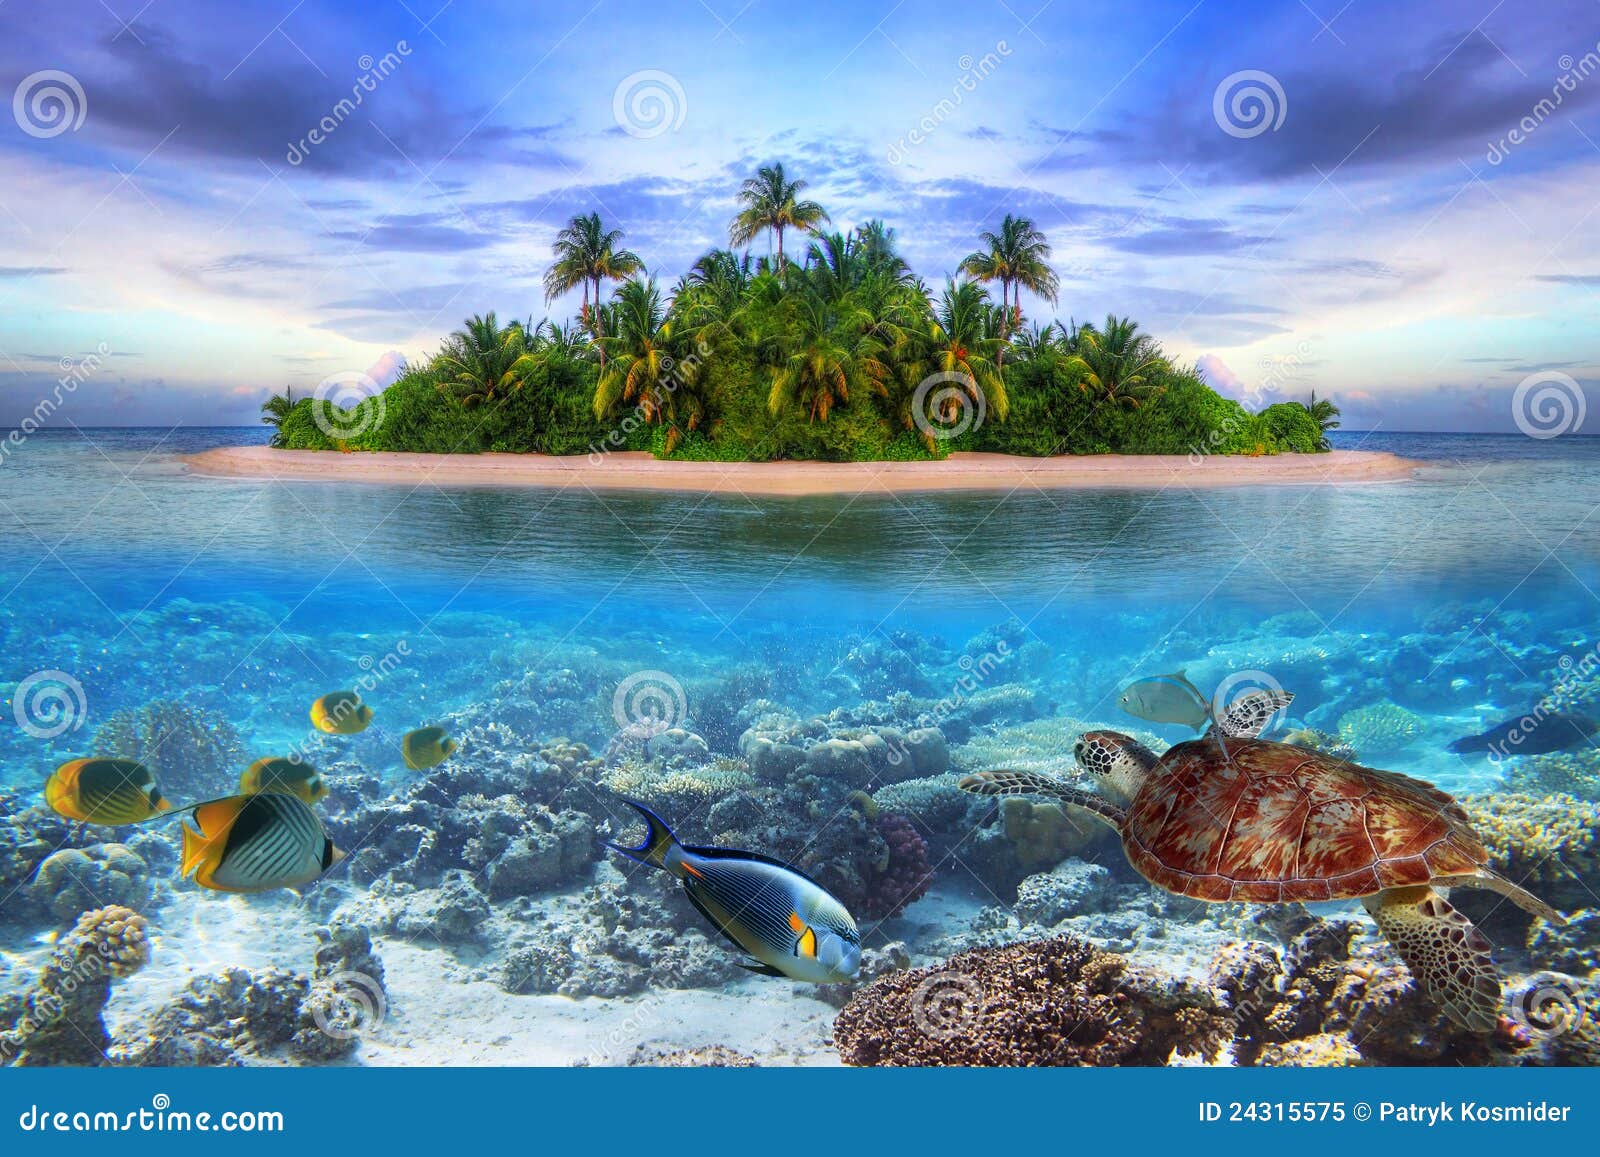 tropical island of maldives